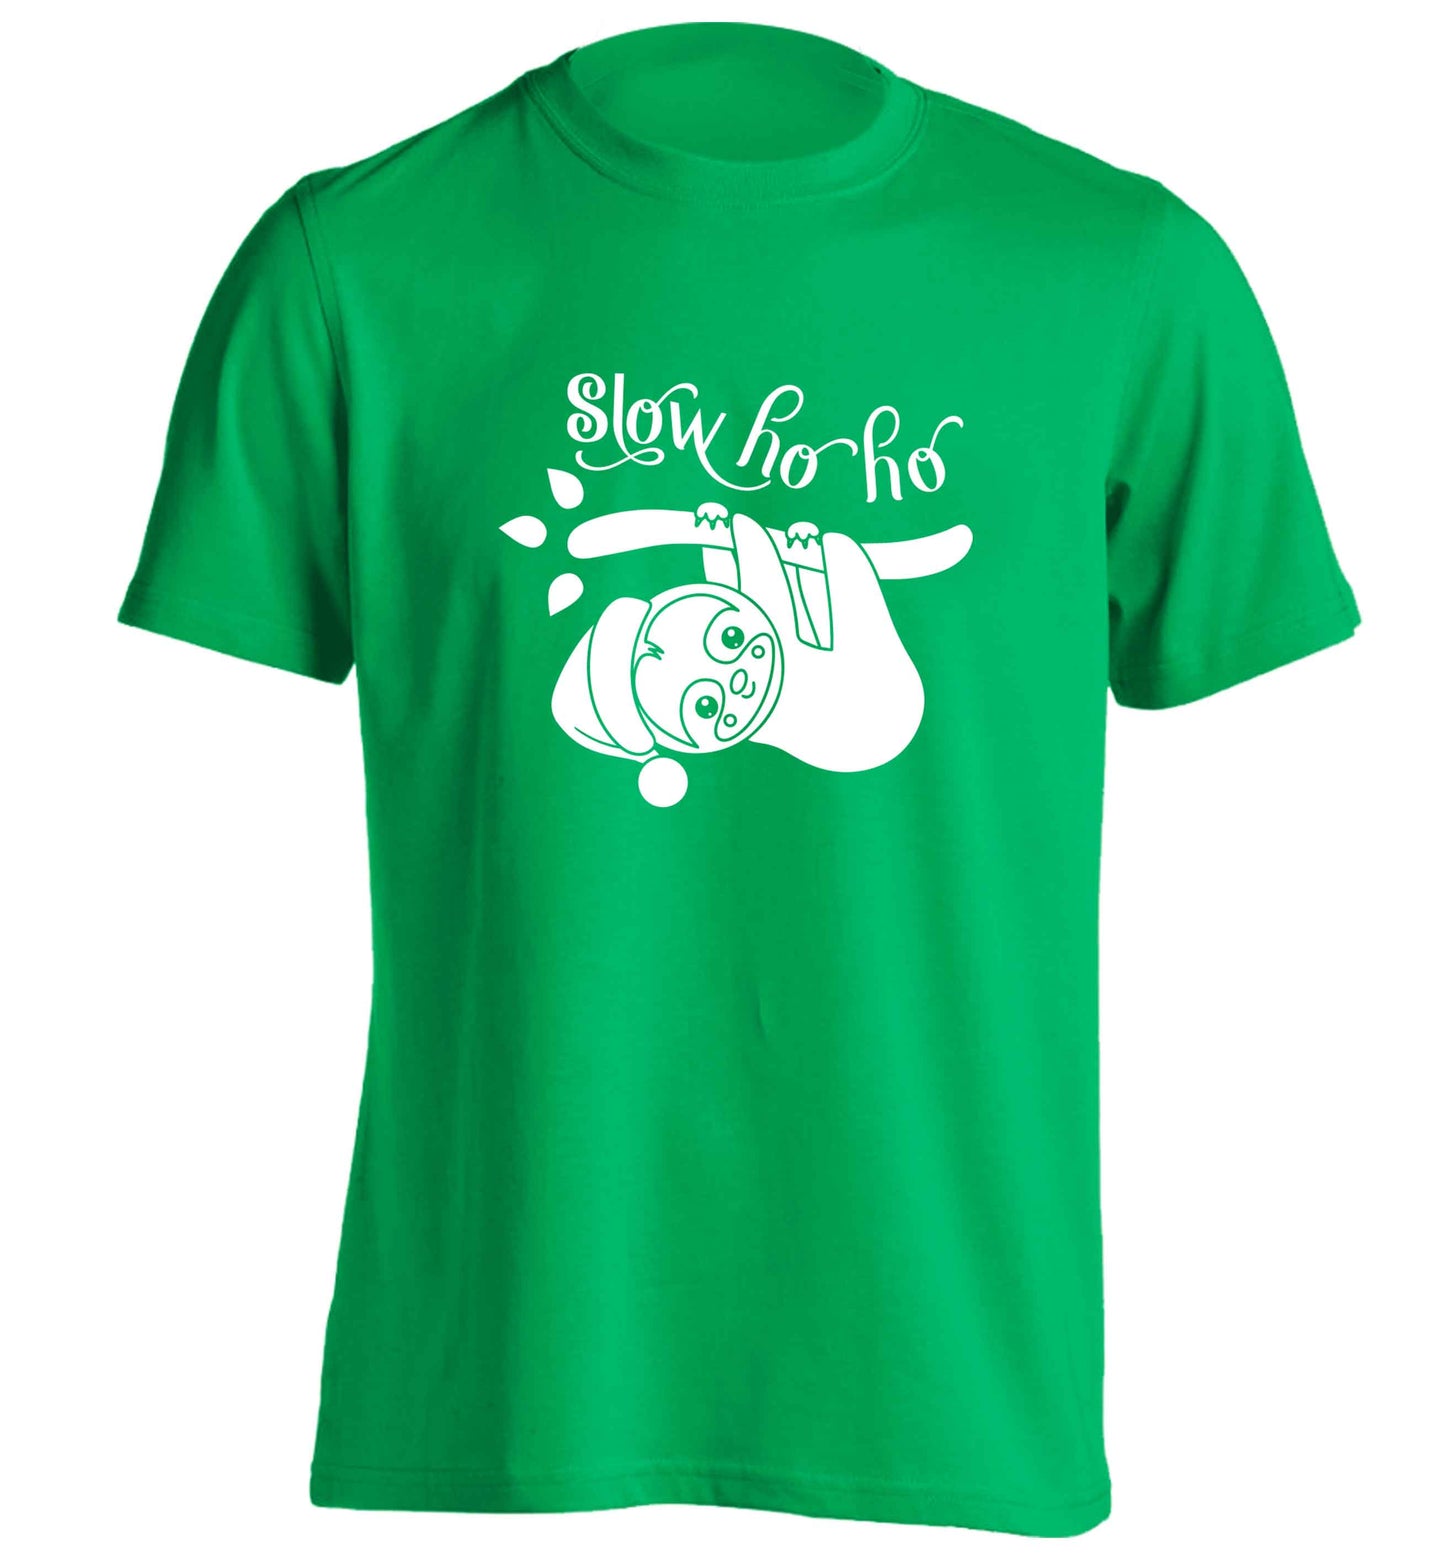 Slow Ho Ho adults unisex green Tshirt 2XL